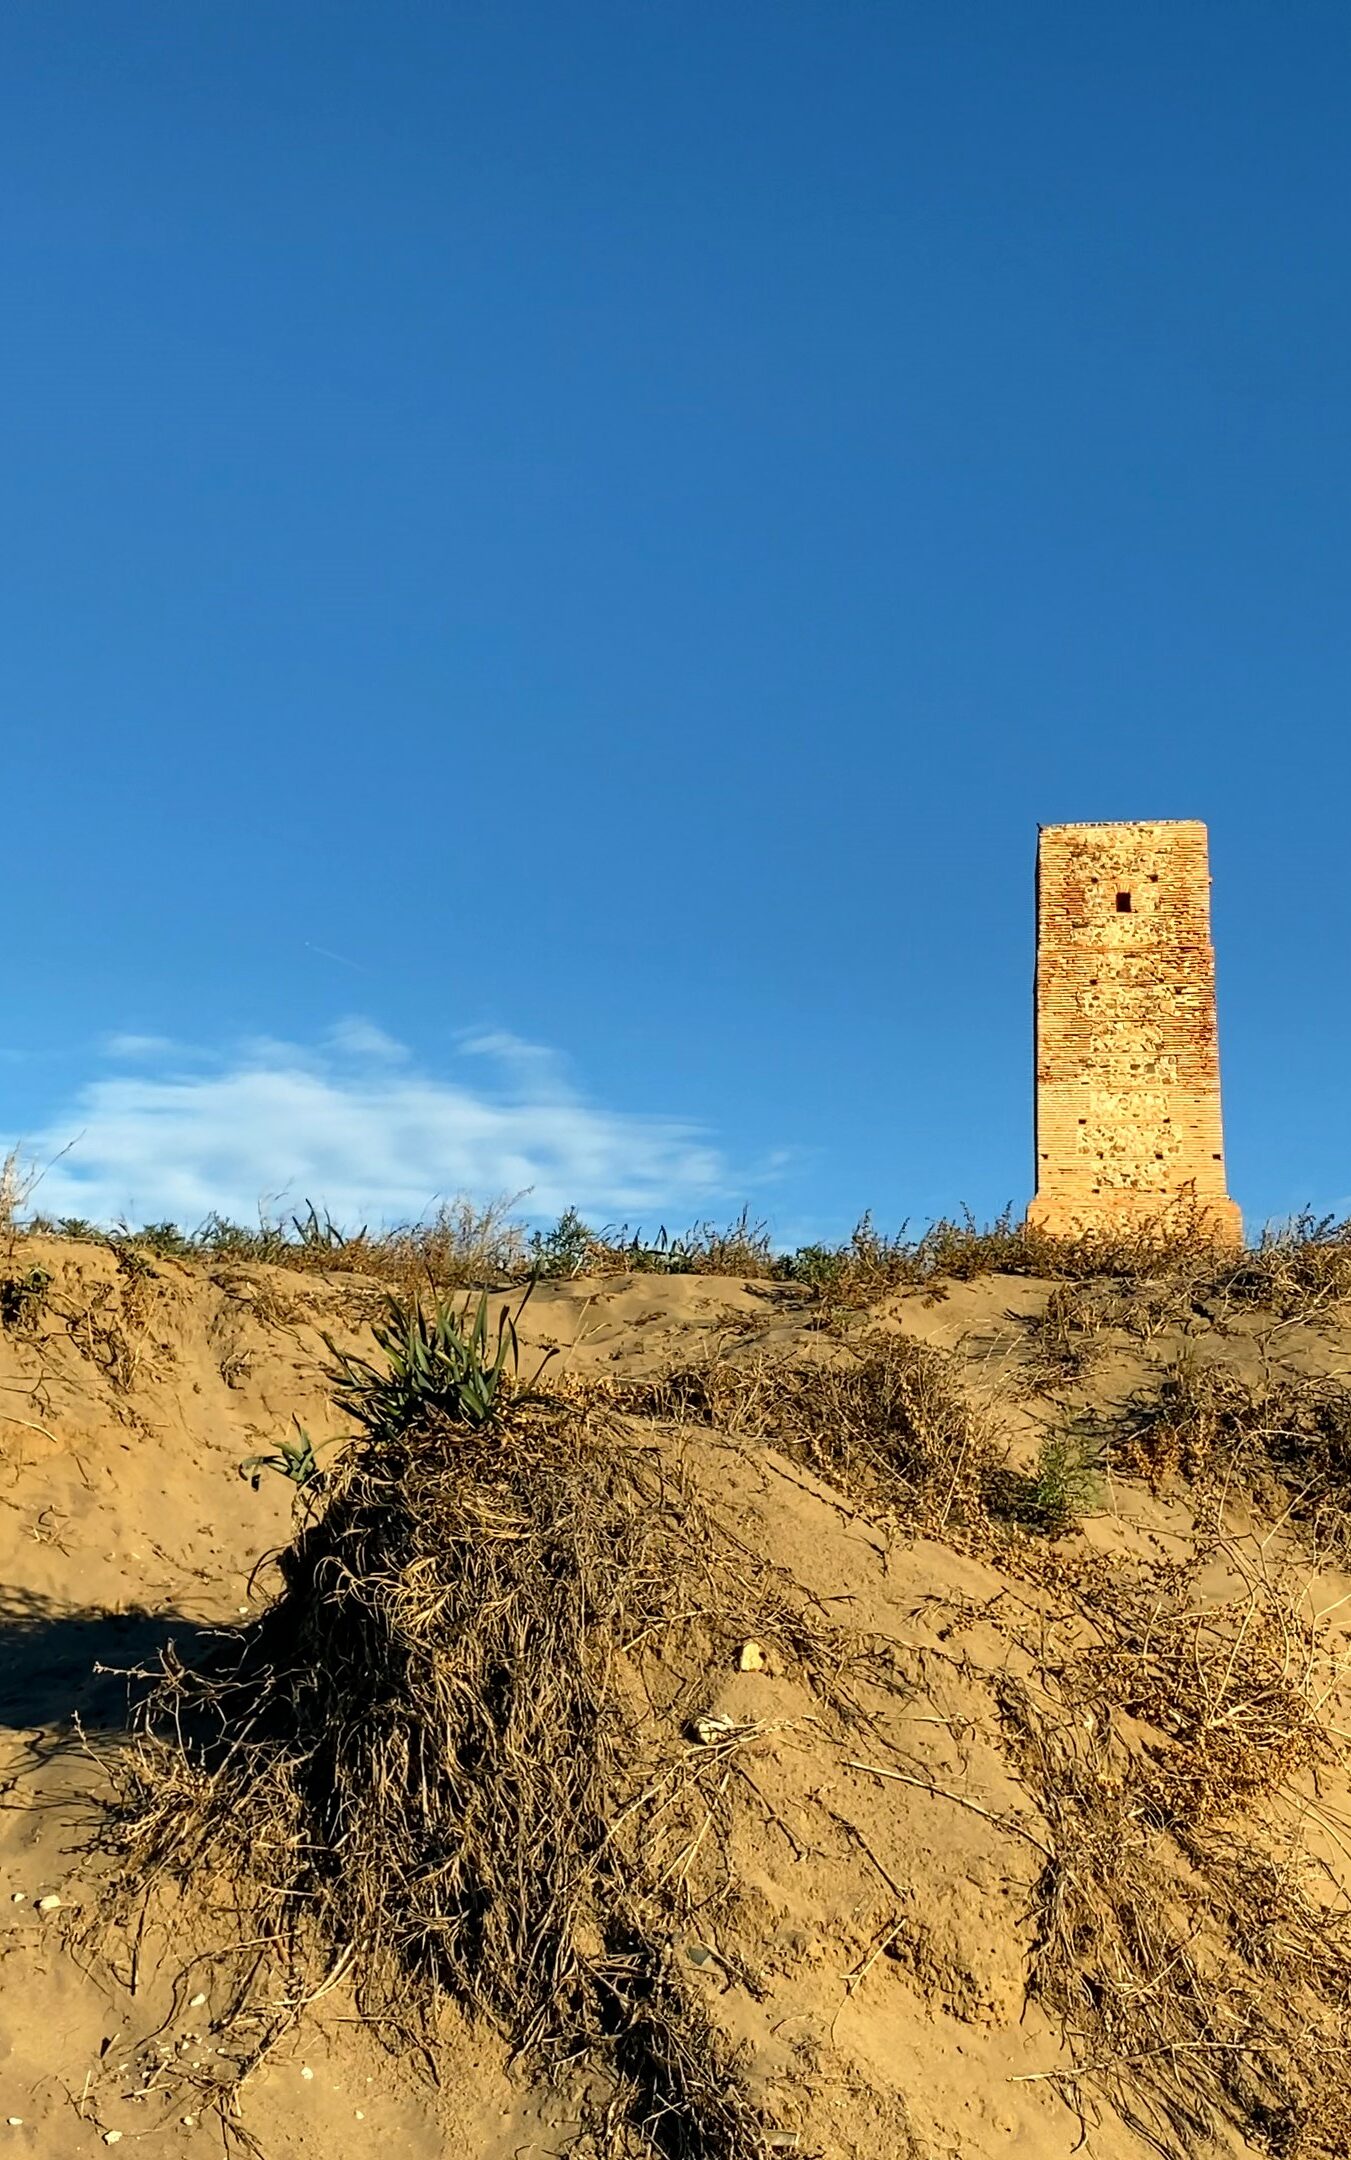 The protected natural area of Dunas de Artola, near Cabopino Beach, Marbella, Spain